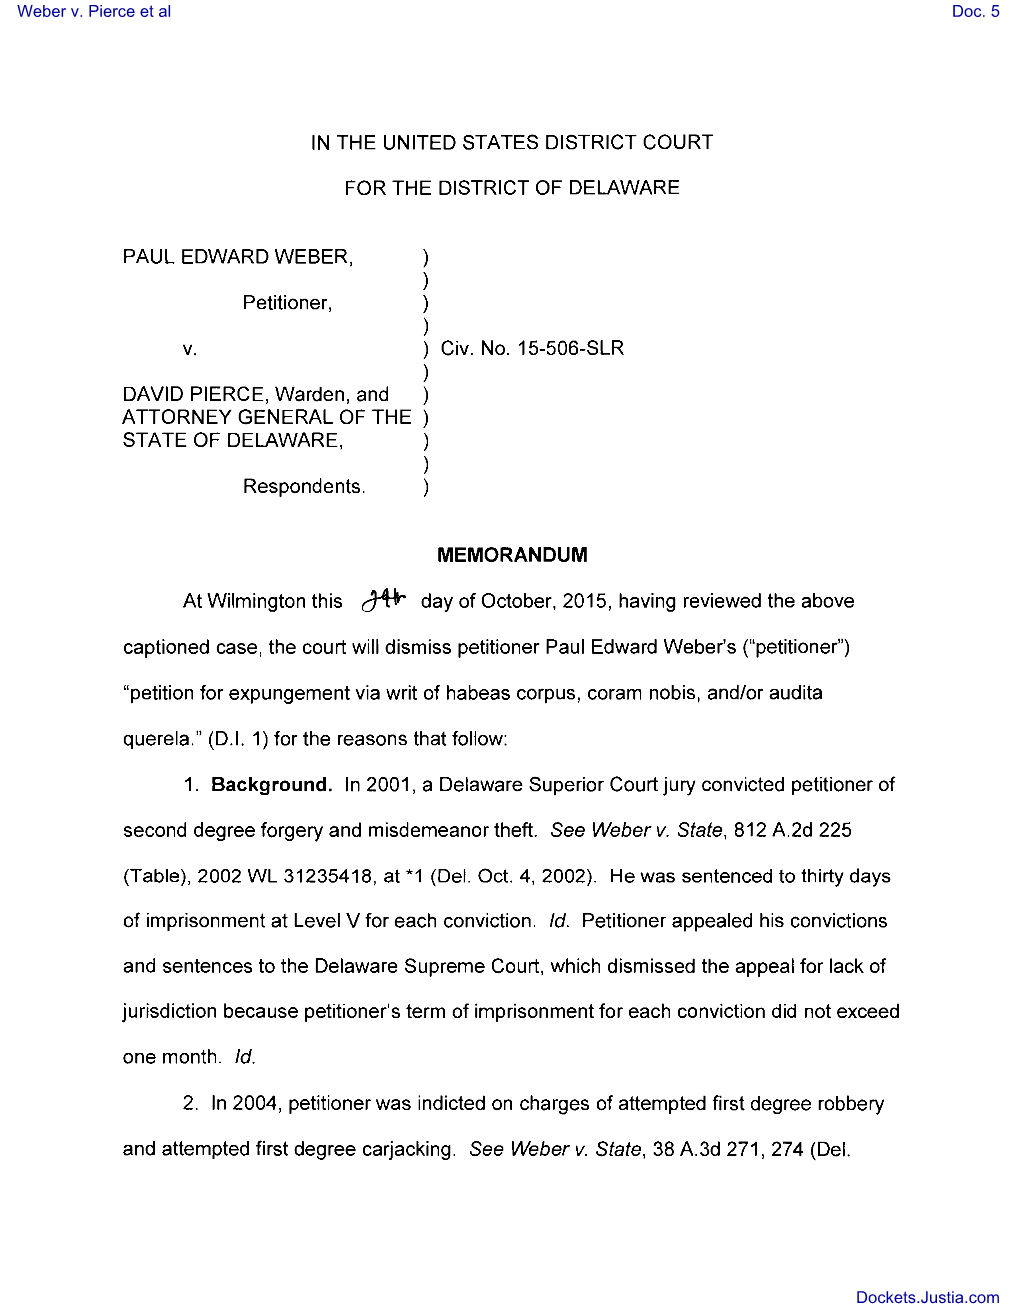 MEMORANDUM. Signed by Judge Sue L. Robinson on 10/29/2015